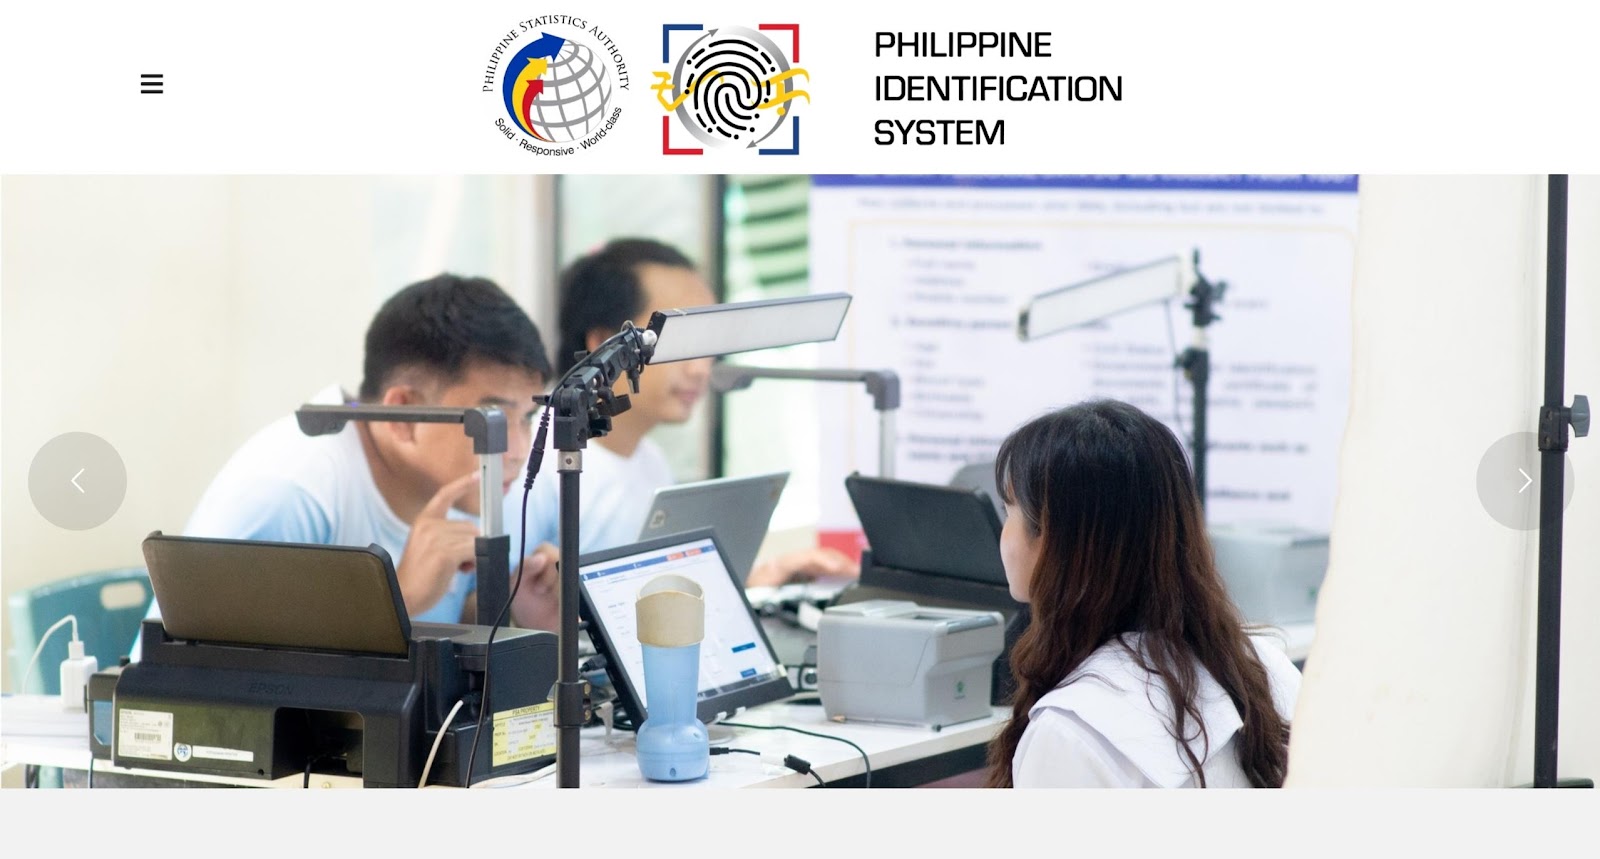 Philippine identification system